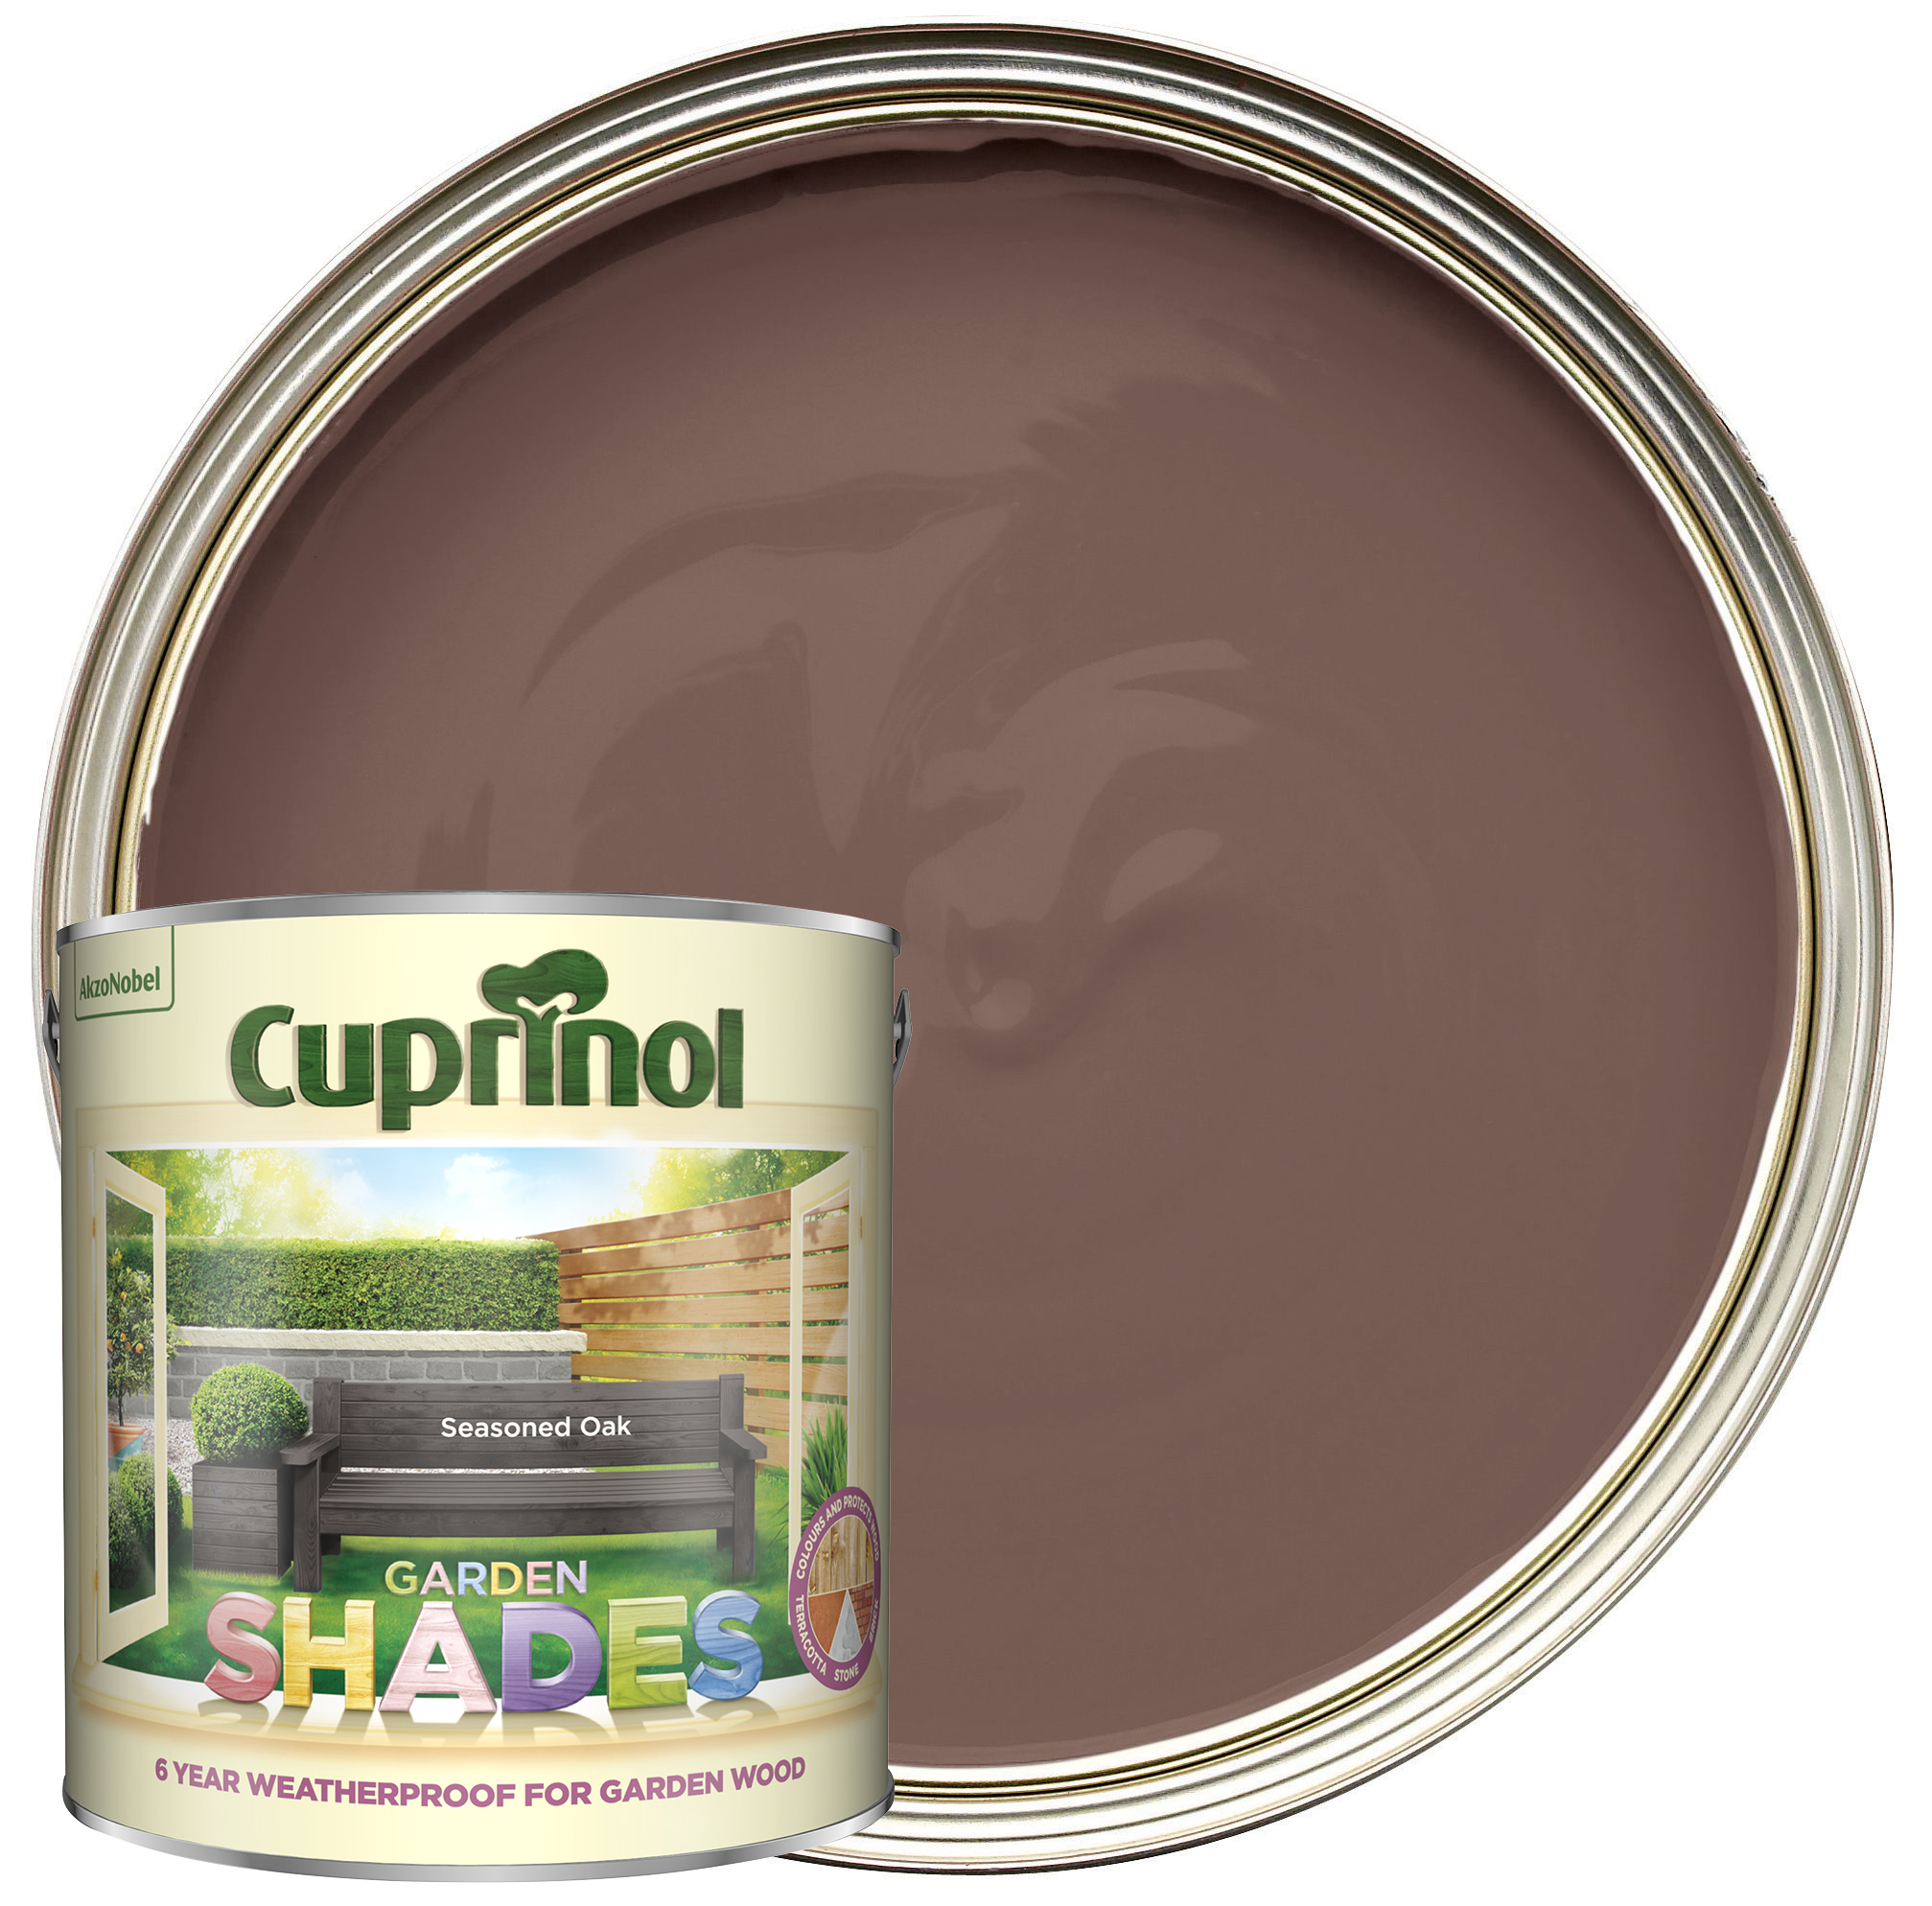 Image of Cuprinol Garden Shades Furniture Paint - Seasoned Oak - 2.5L